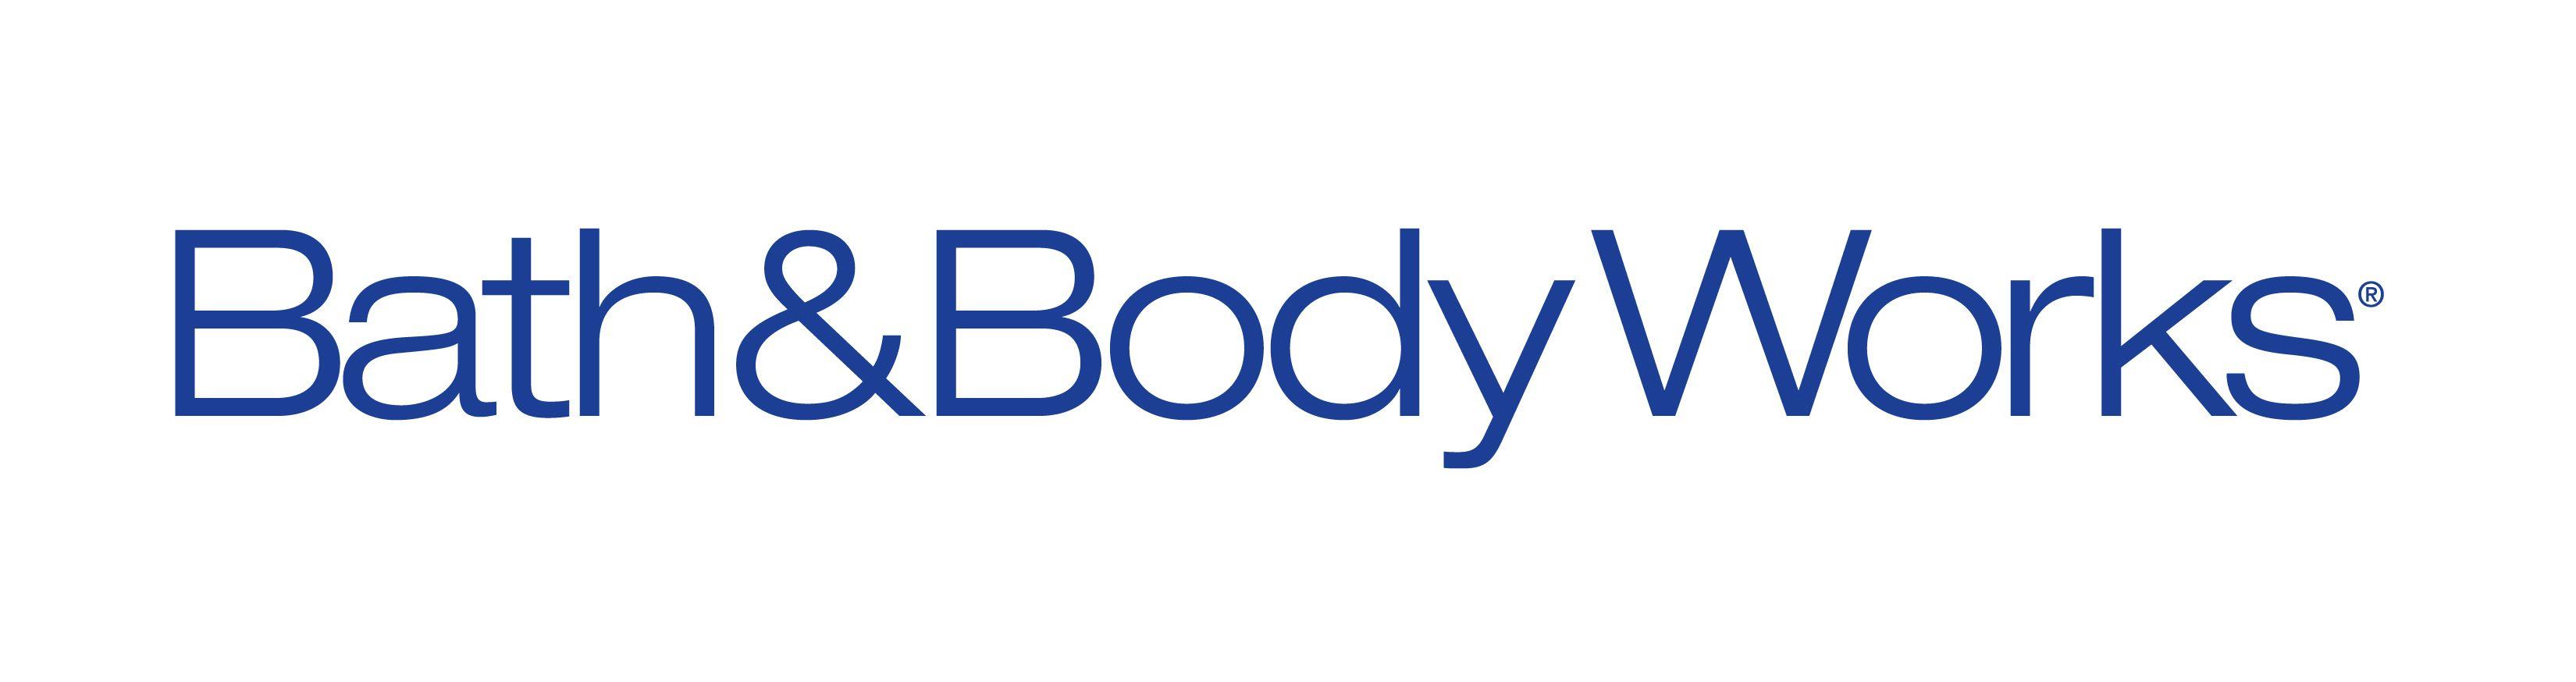 Bath and Body Works Logo - Bath & Body Works | St. Clair Square